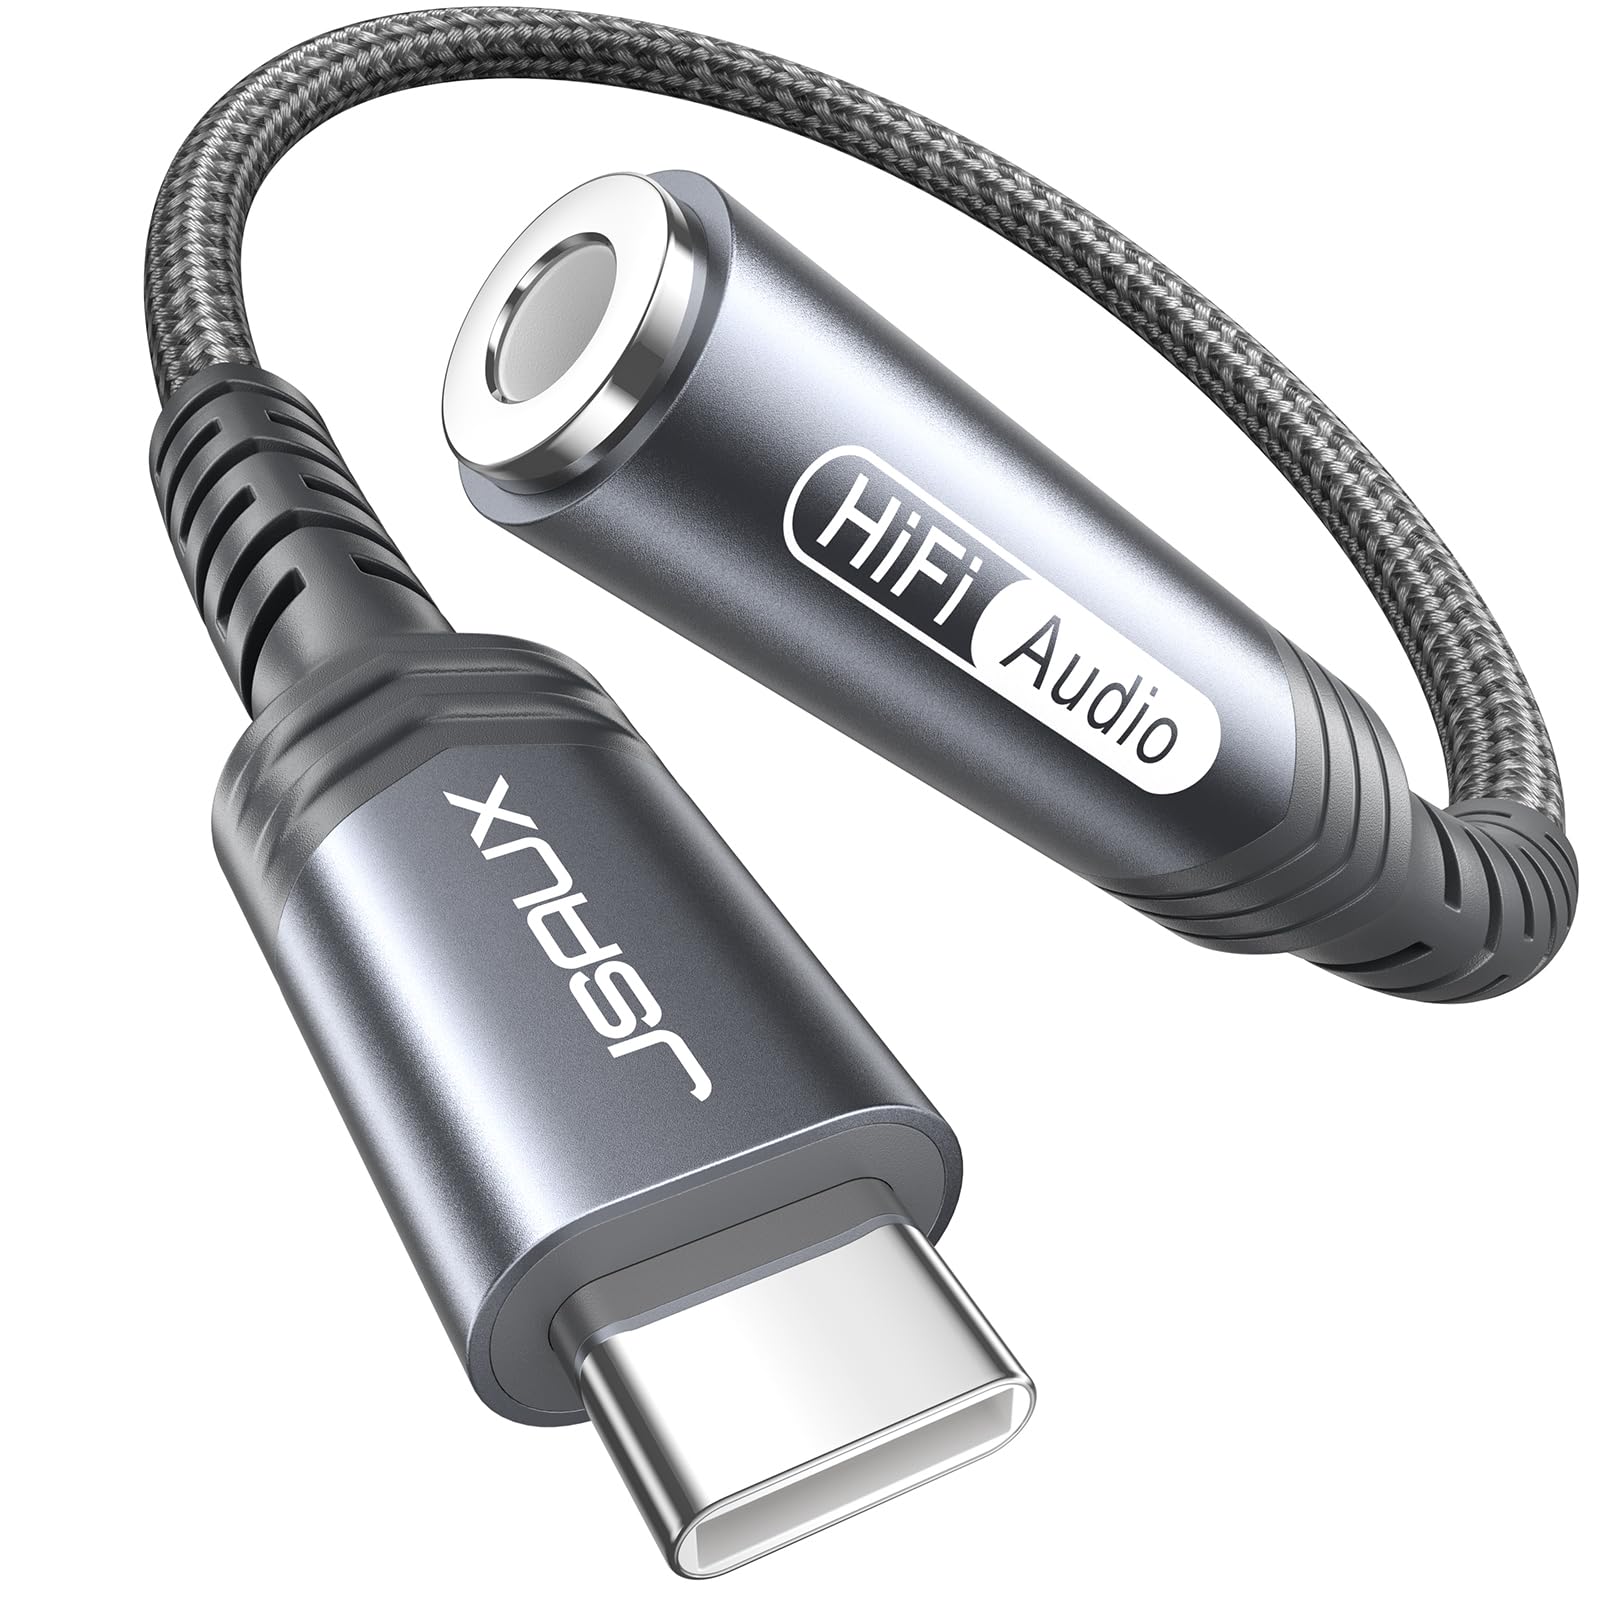 USB Type-C to 3.5mm Female Headphone Jack Adapter $4.49 + FS w/ Prime